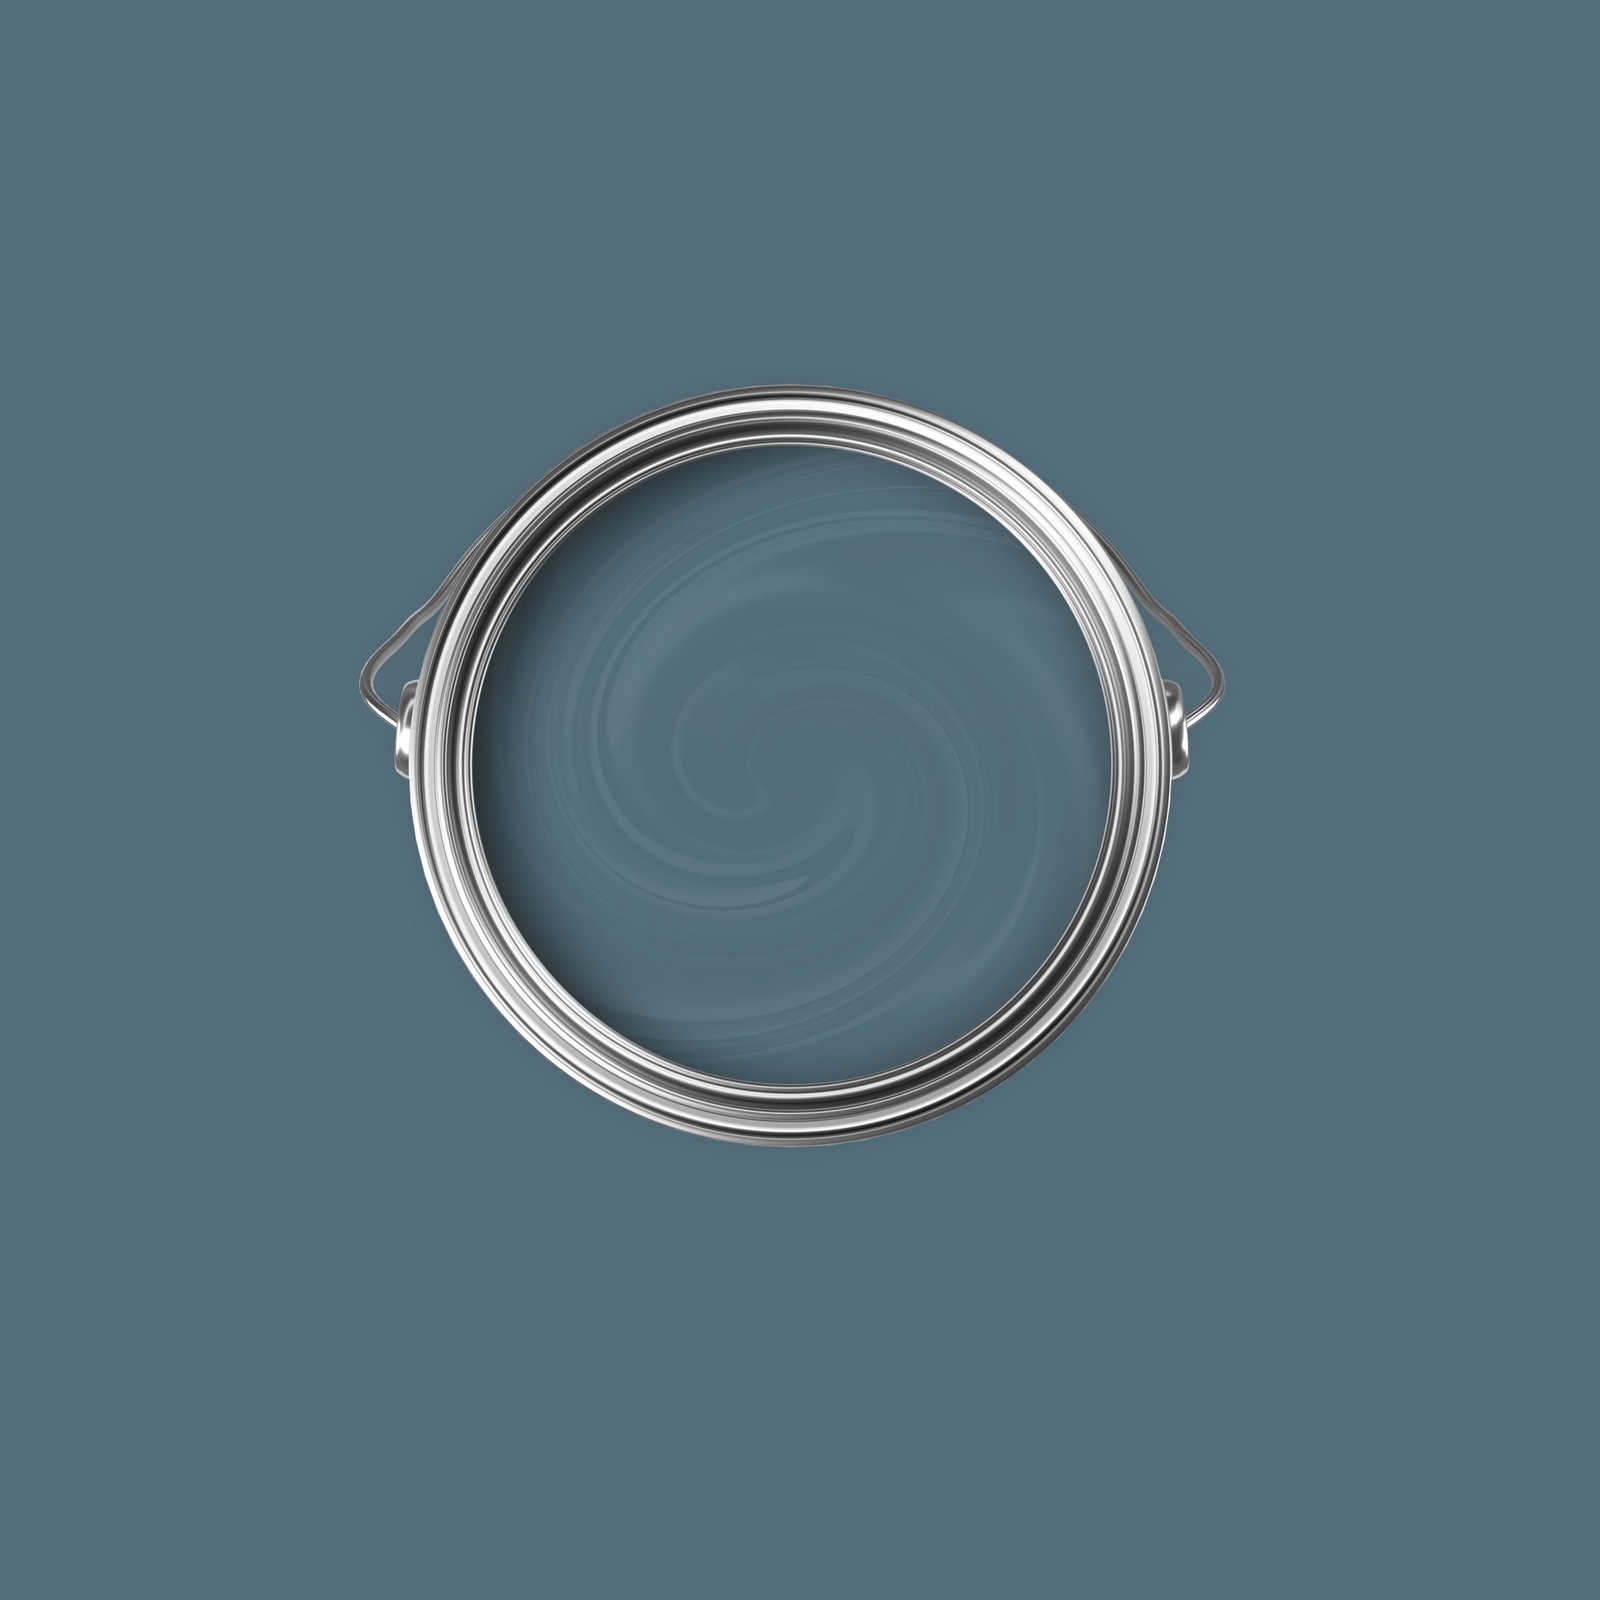             Premium Wall Paint Balanced Dove Blue »Balanced Blue« NW312 – 2.5 litre
        